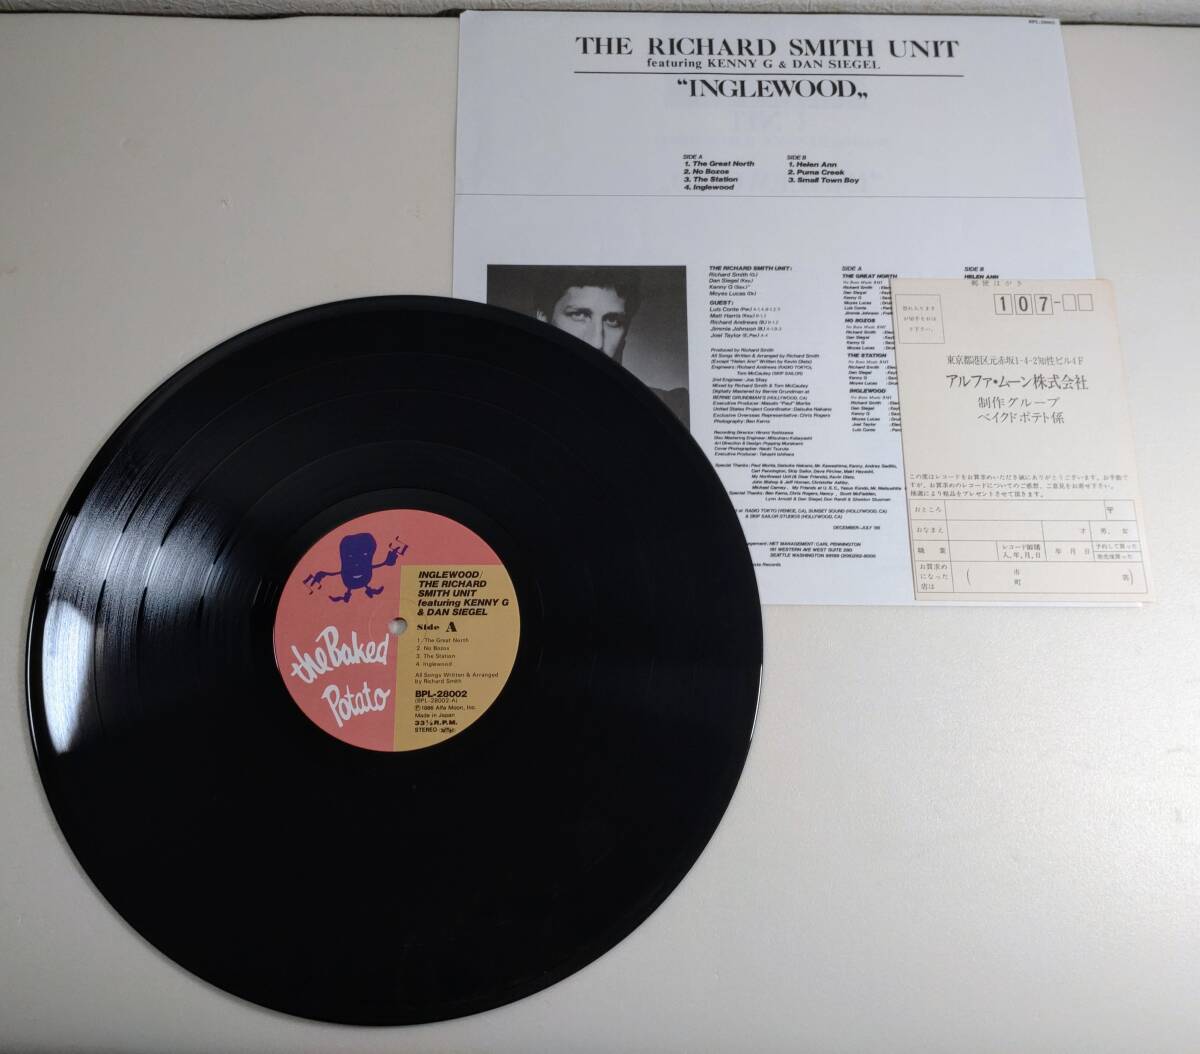  THE RICHARD SMITH UNIT featurring Kenny G&Dan Siegel/INGLEWOOD/リチャード スミス ユニット ケニーG 帯付 日本盤 LP Record レコード_画像3